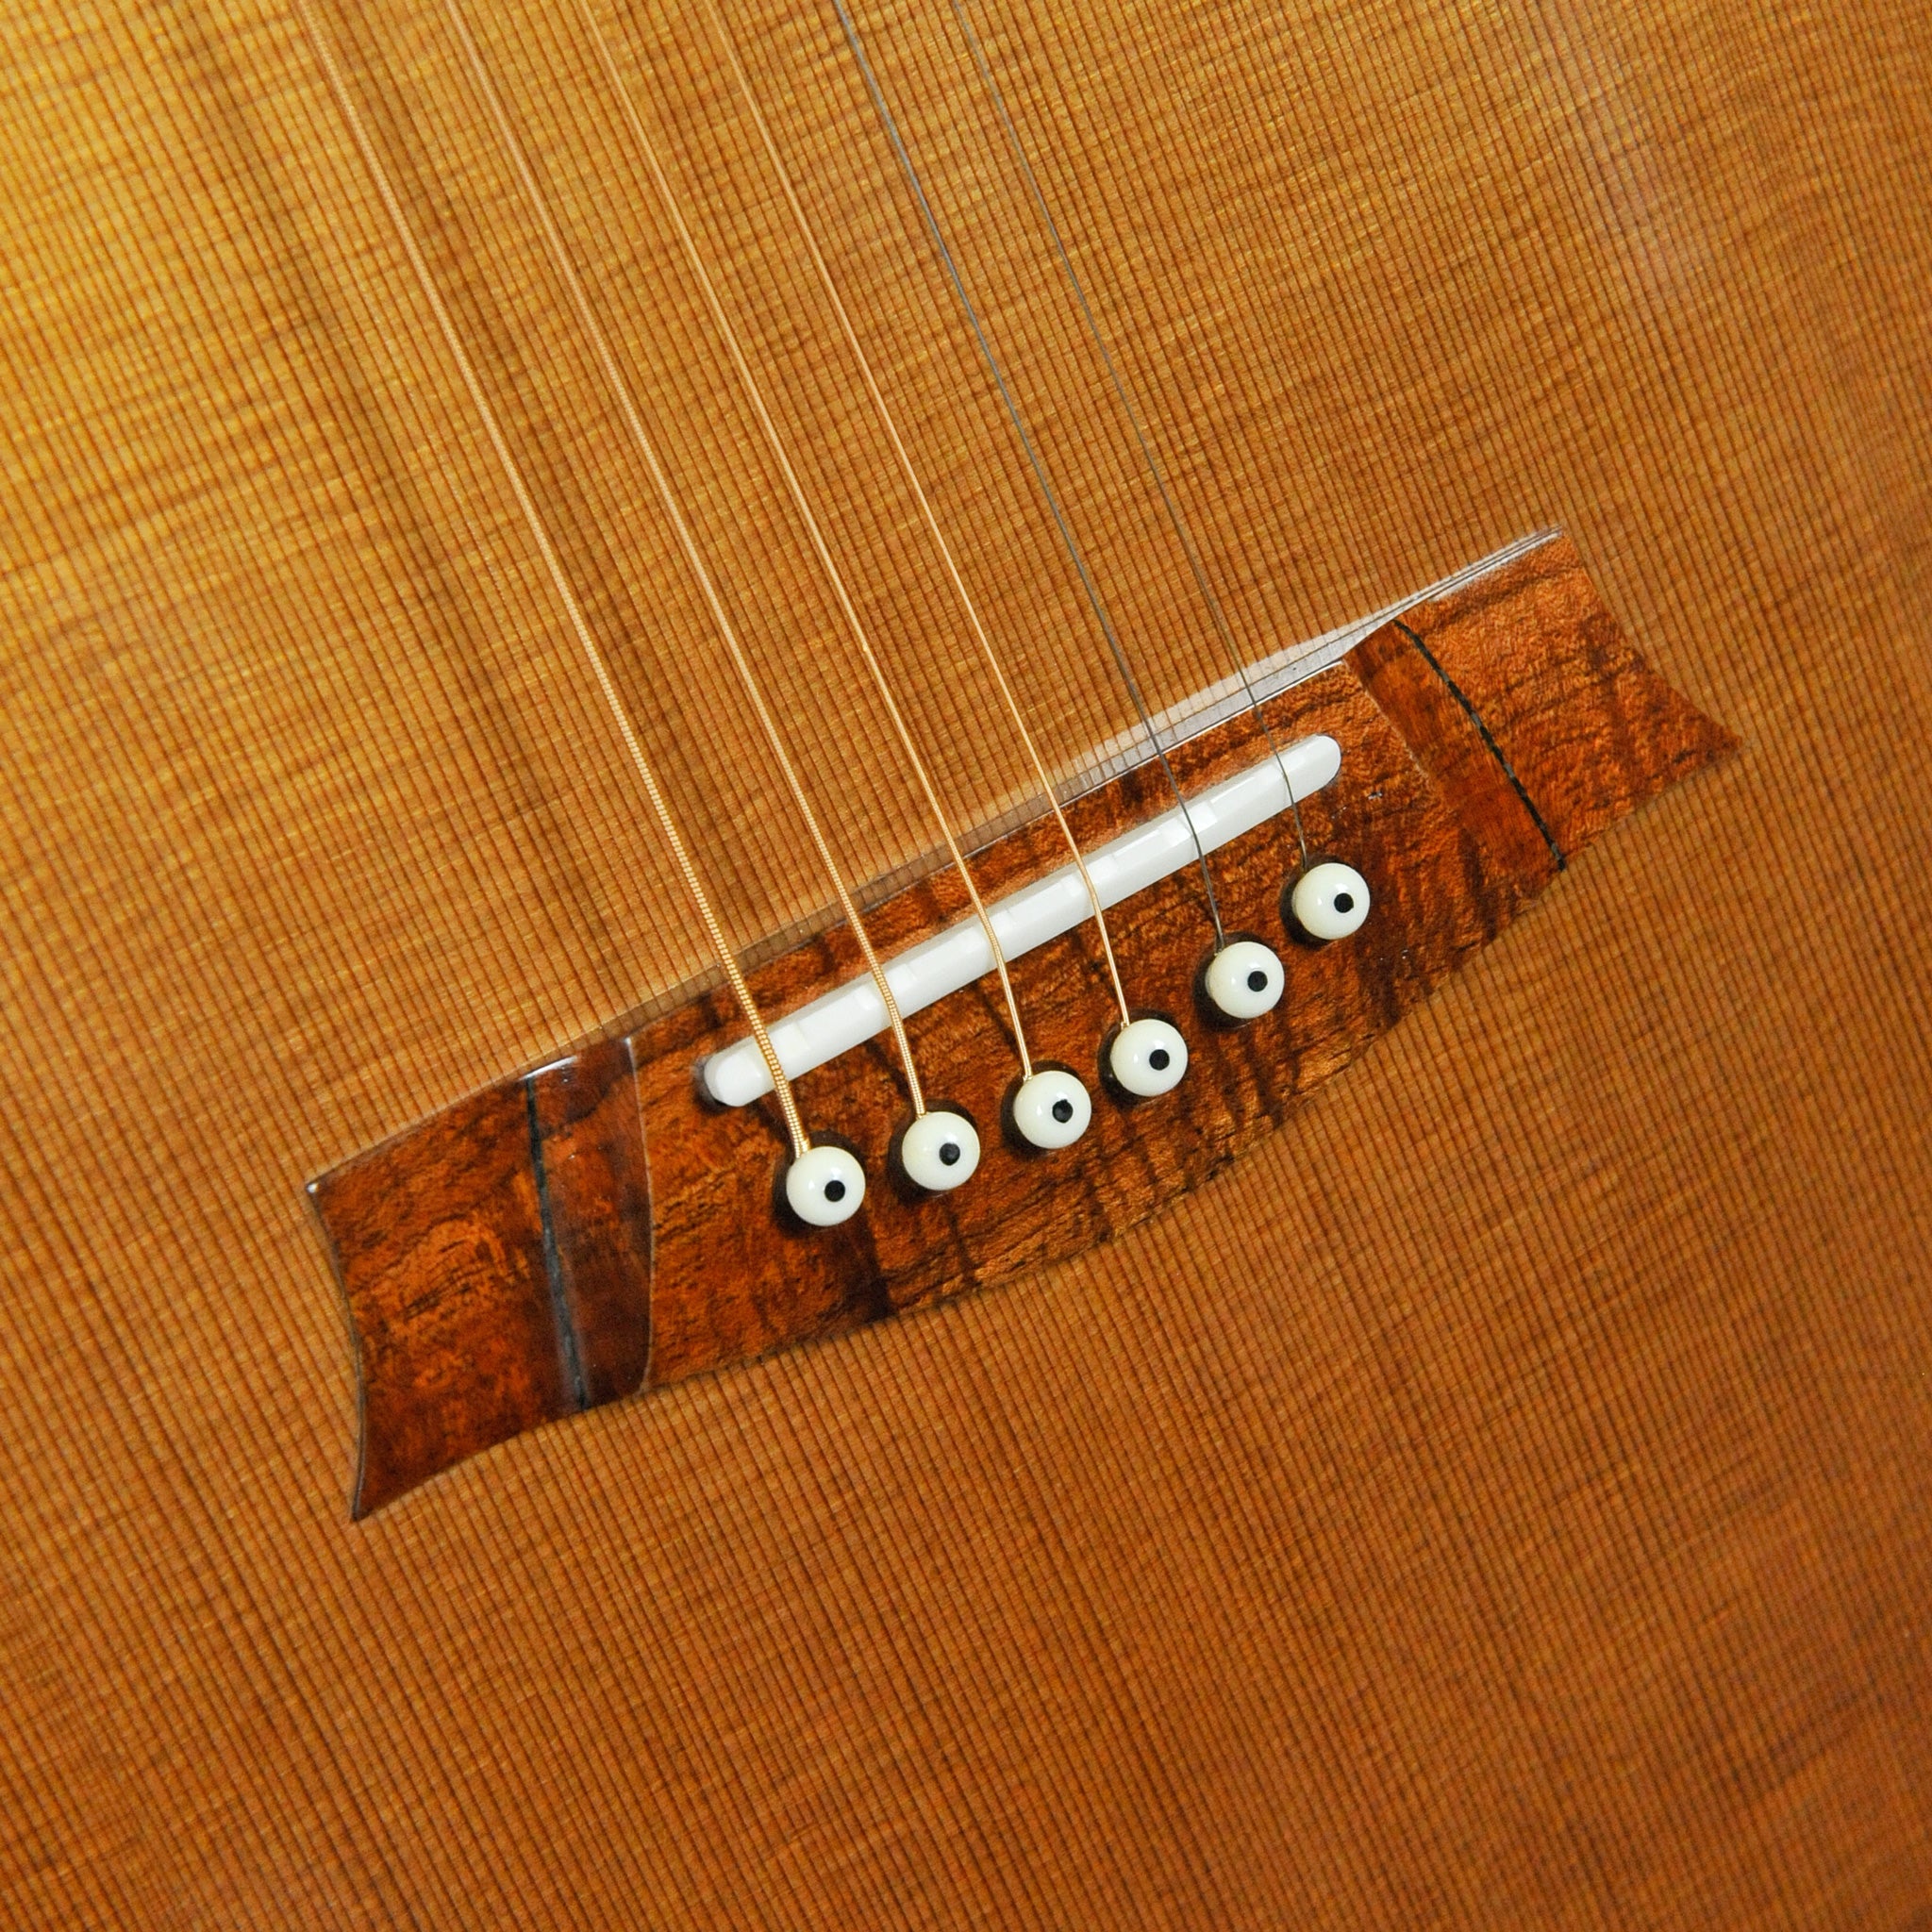 Trevor Gore "Medium Body Fingerpicker"  Cedar/Indian Rosewood Steel String Guitar